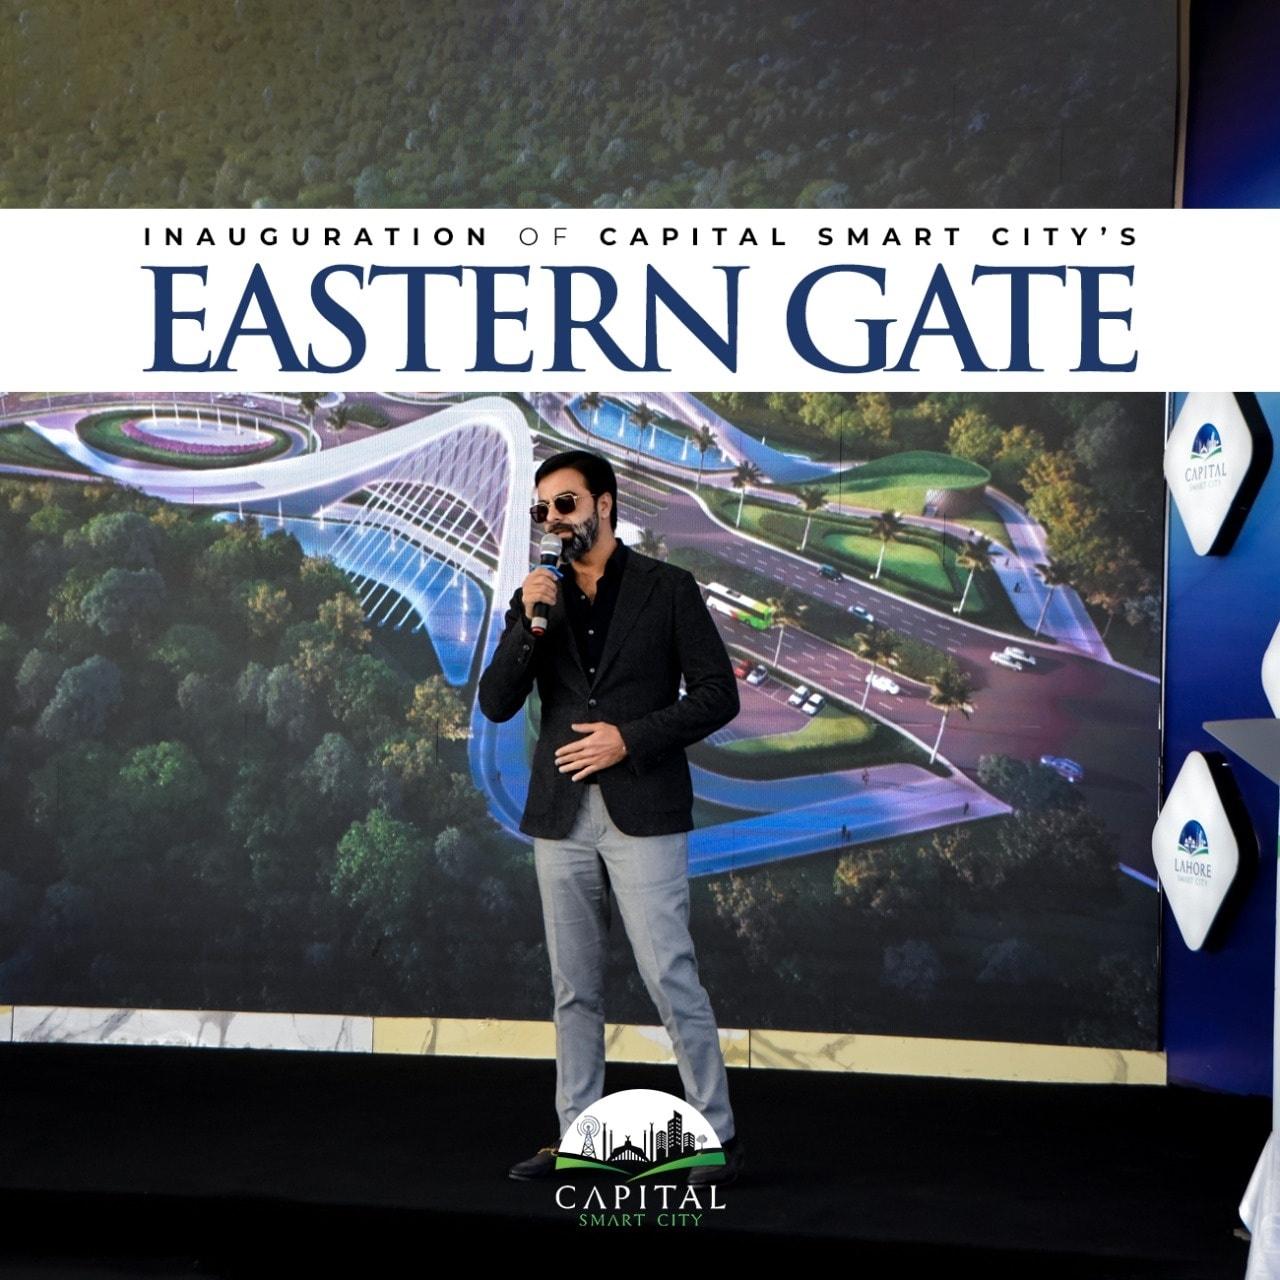 Inauguration of Capital Smart City Eastern Gate